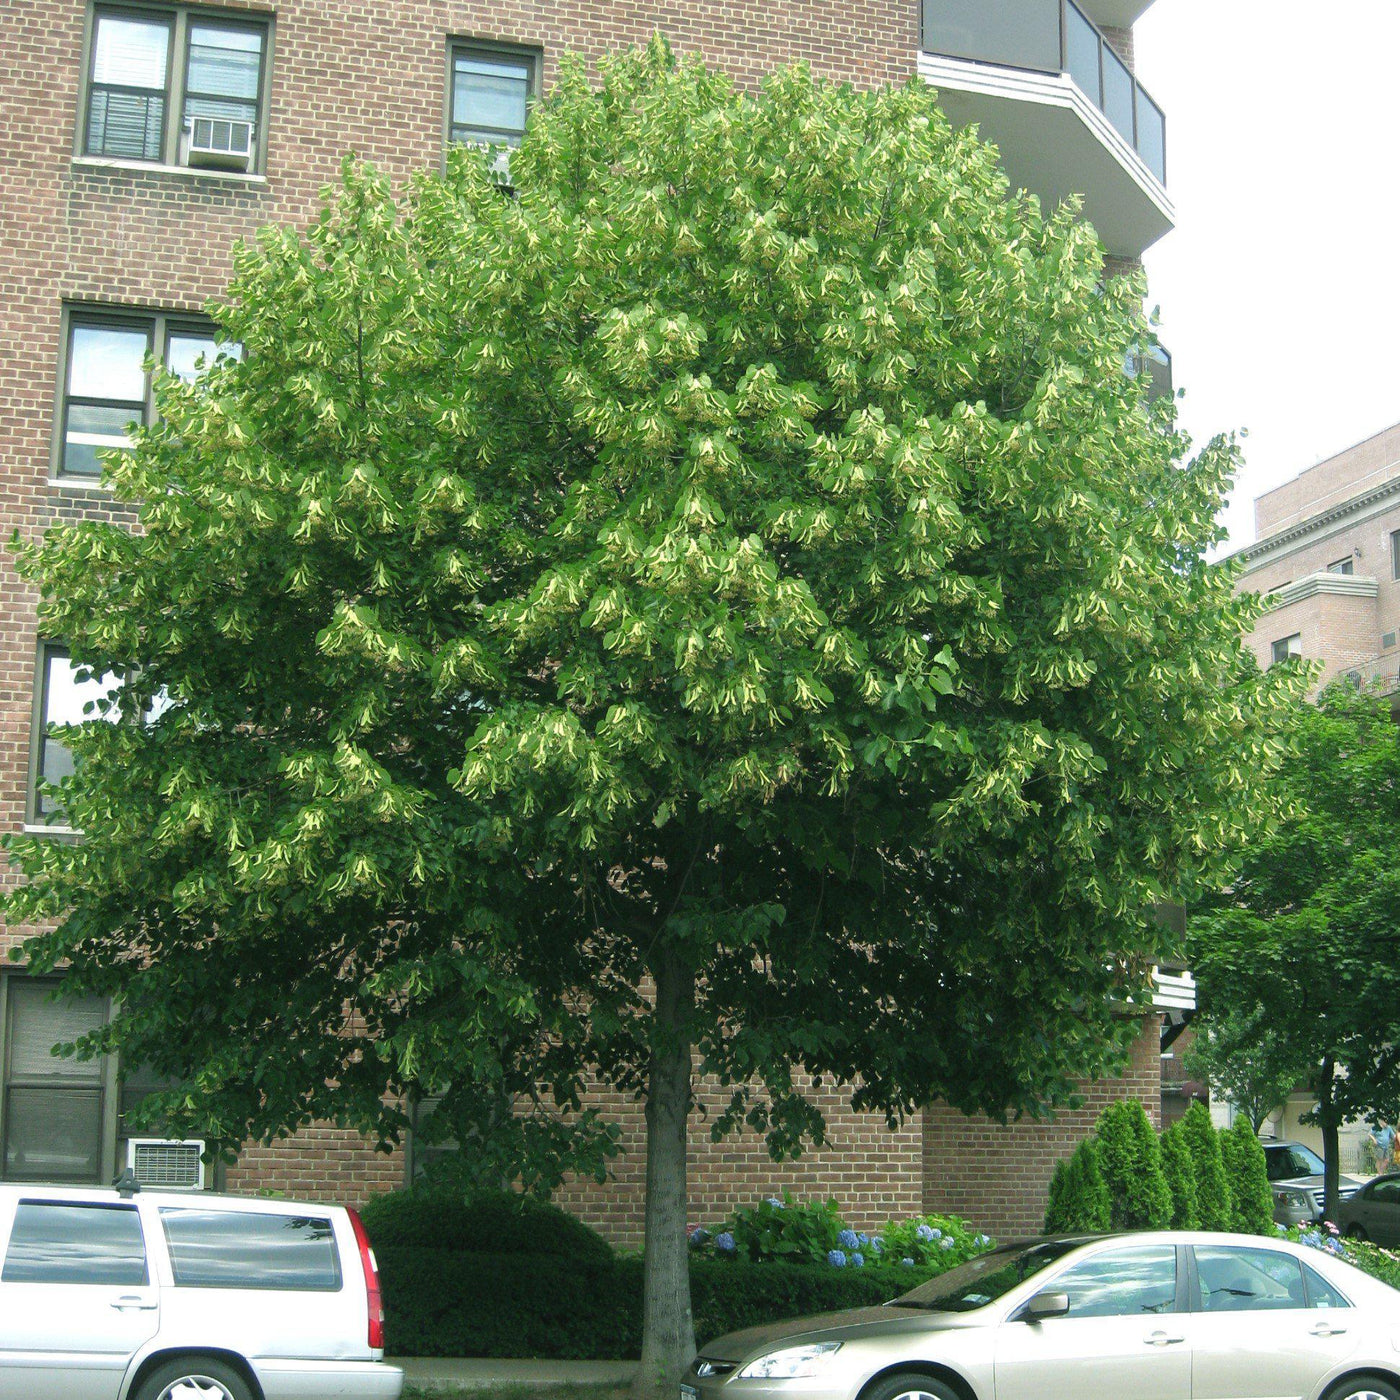 Tilia americana ~ Basswood, Linden Tree